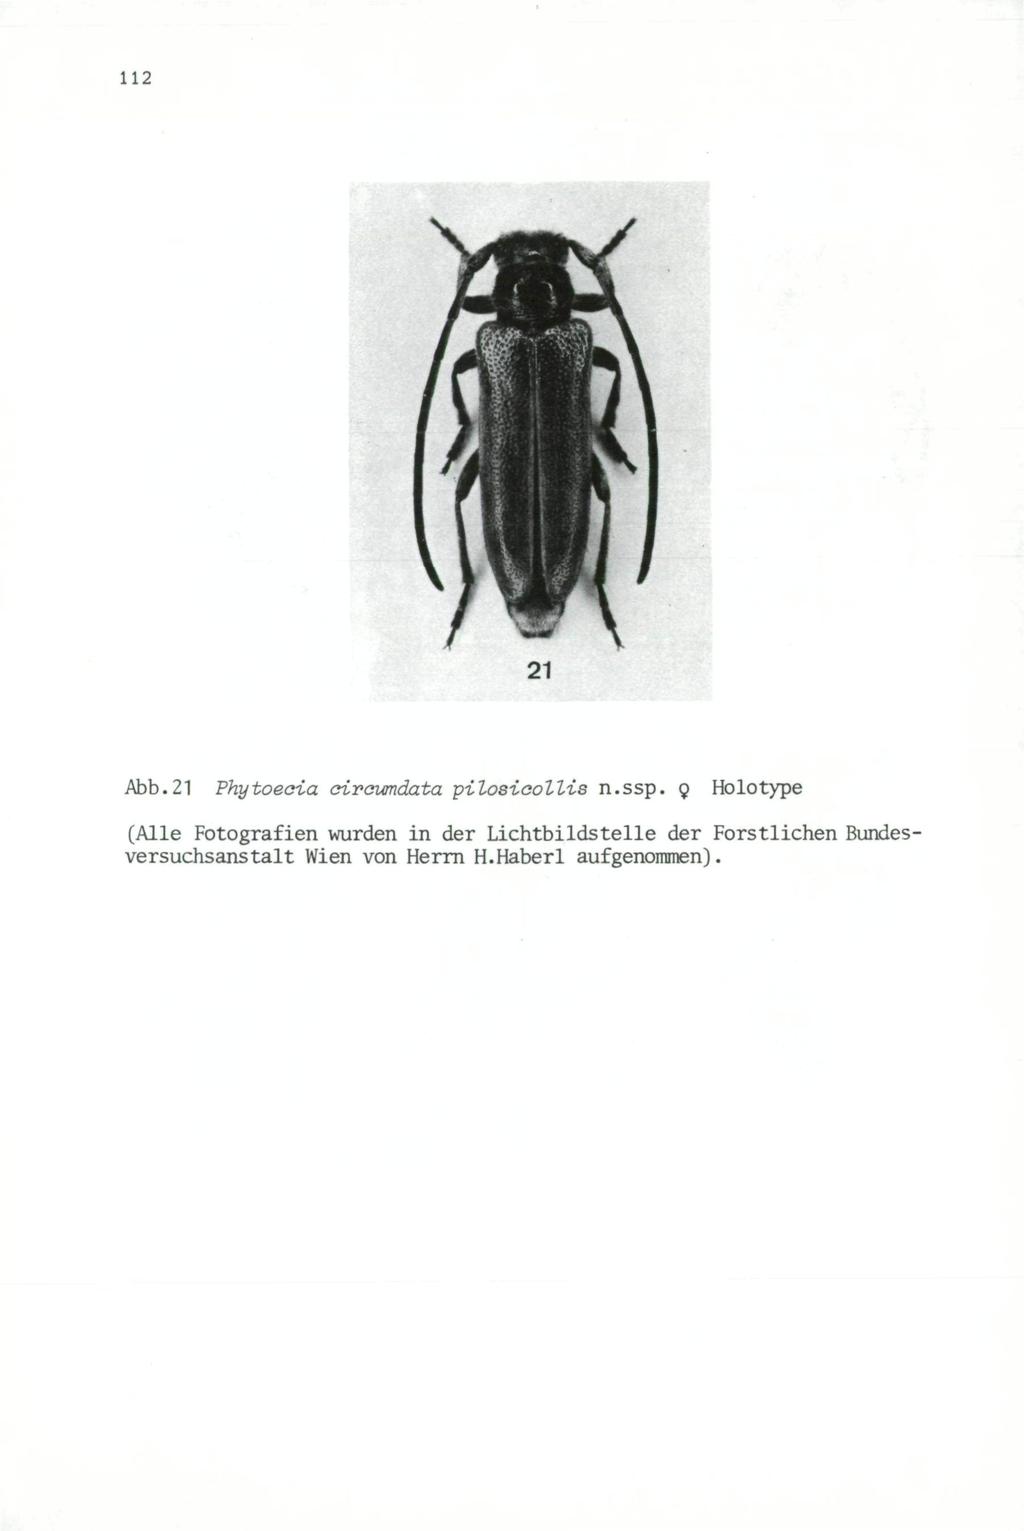 112 Wiener Coleopterologenverein (WCV), download unter www.biologiezentrum.at Abb.21 Phytoeaia oiraumdata pilosicollis n.ssp.